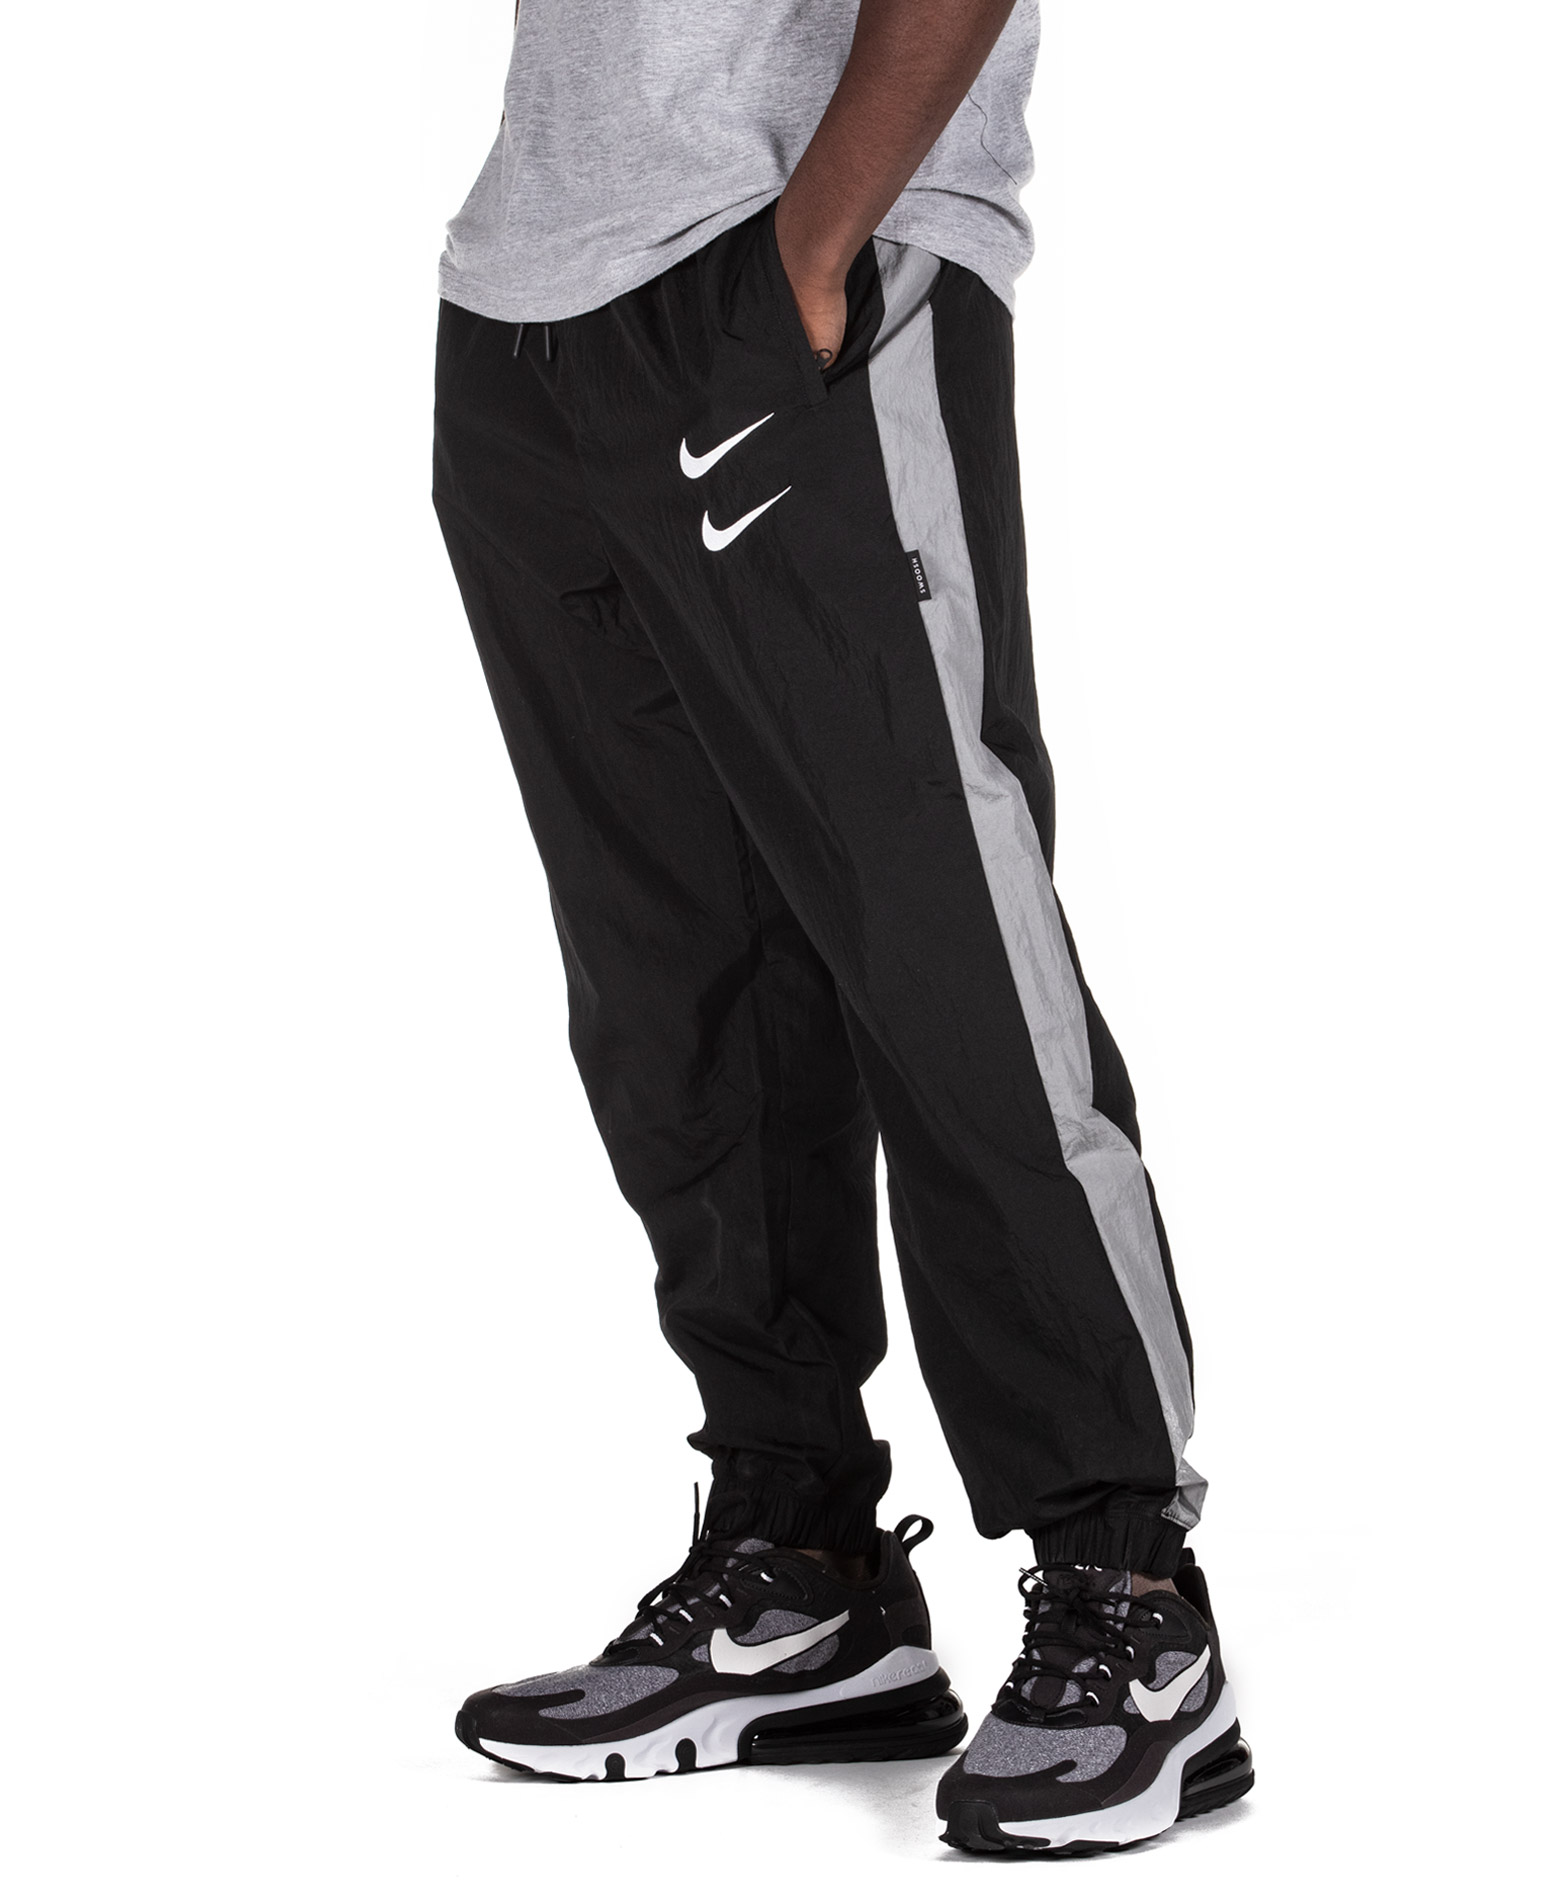 Nike Woven Swoosh Pant in Black